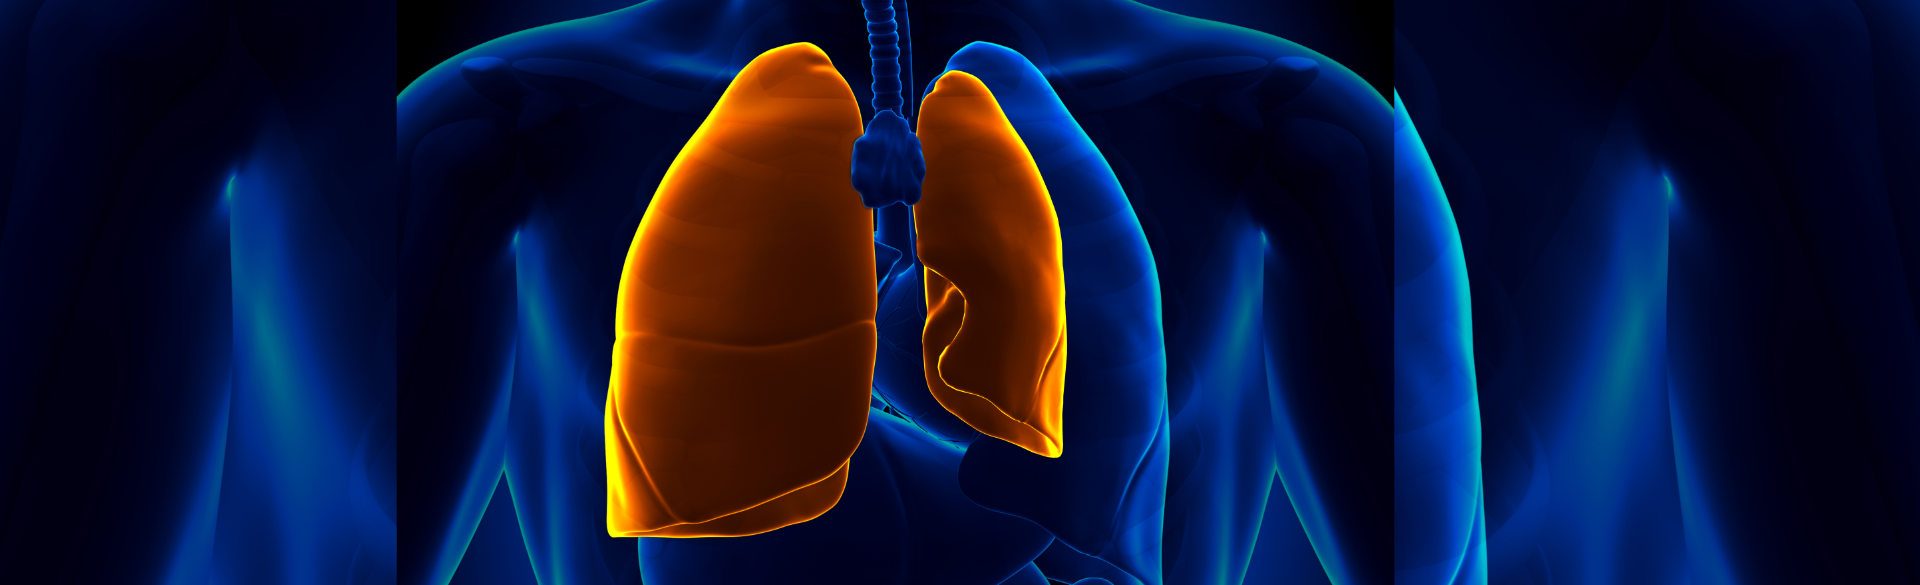 Lung transplant study